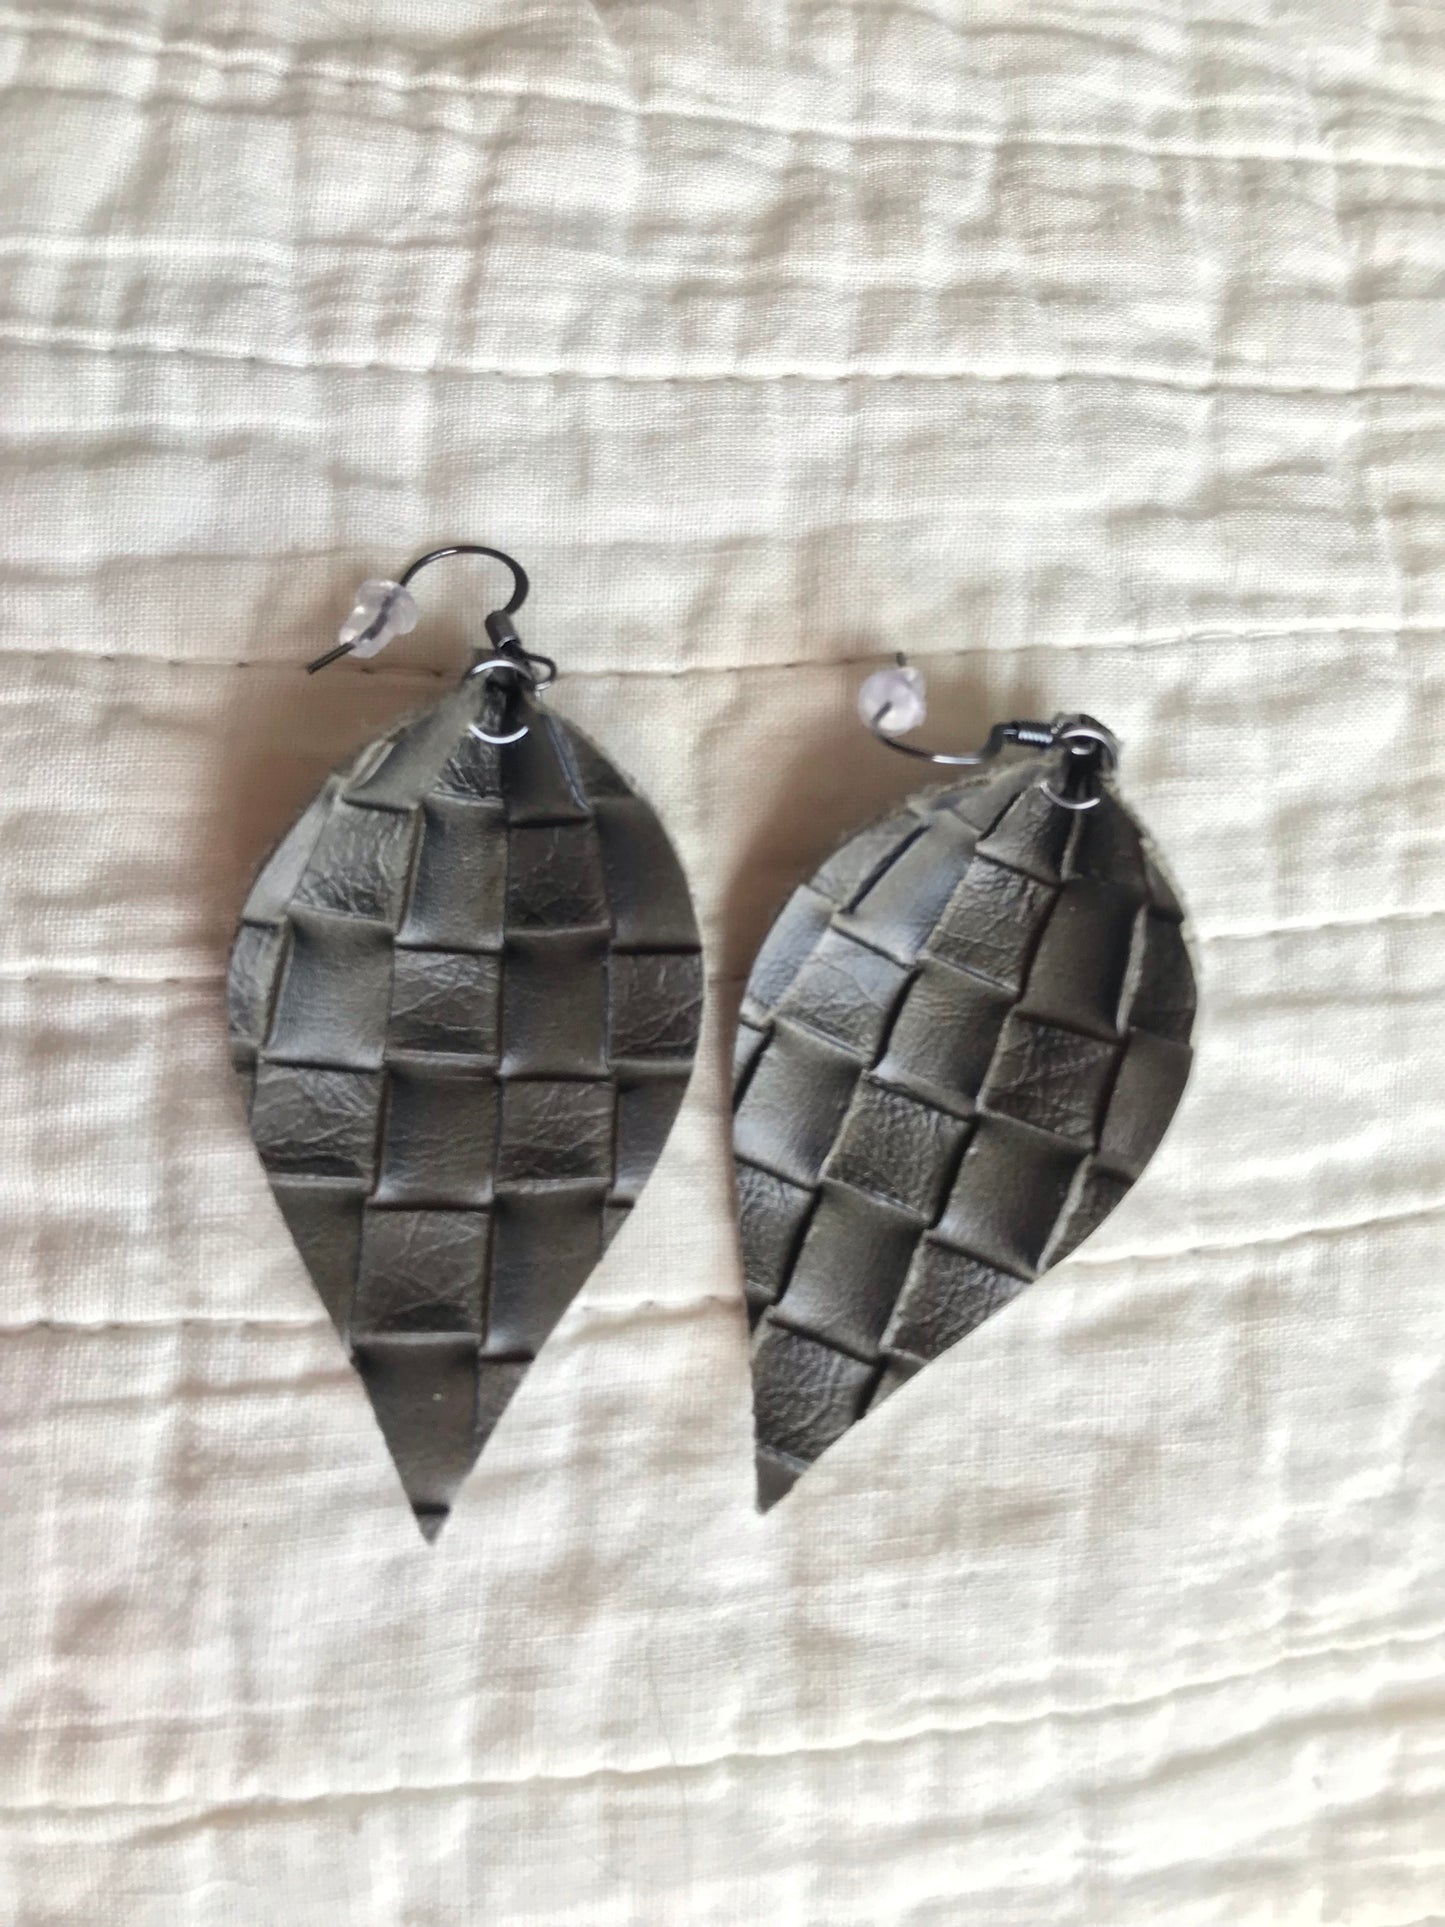 Handmade Leather Earrings